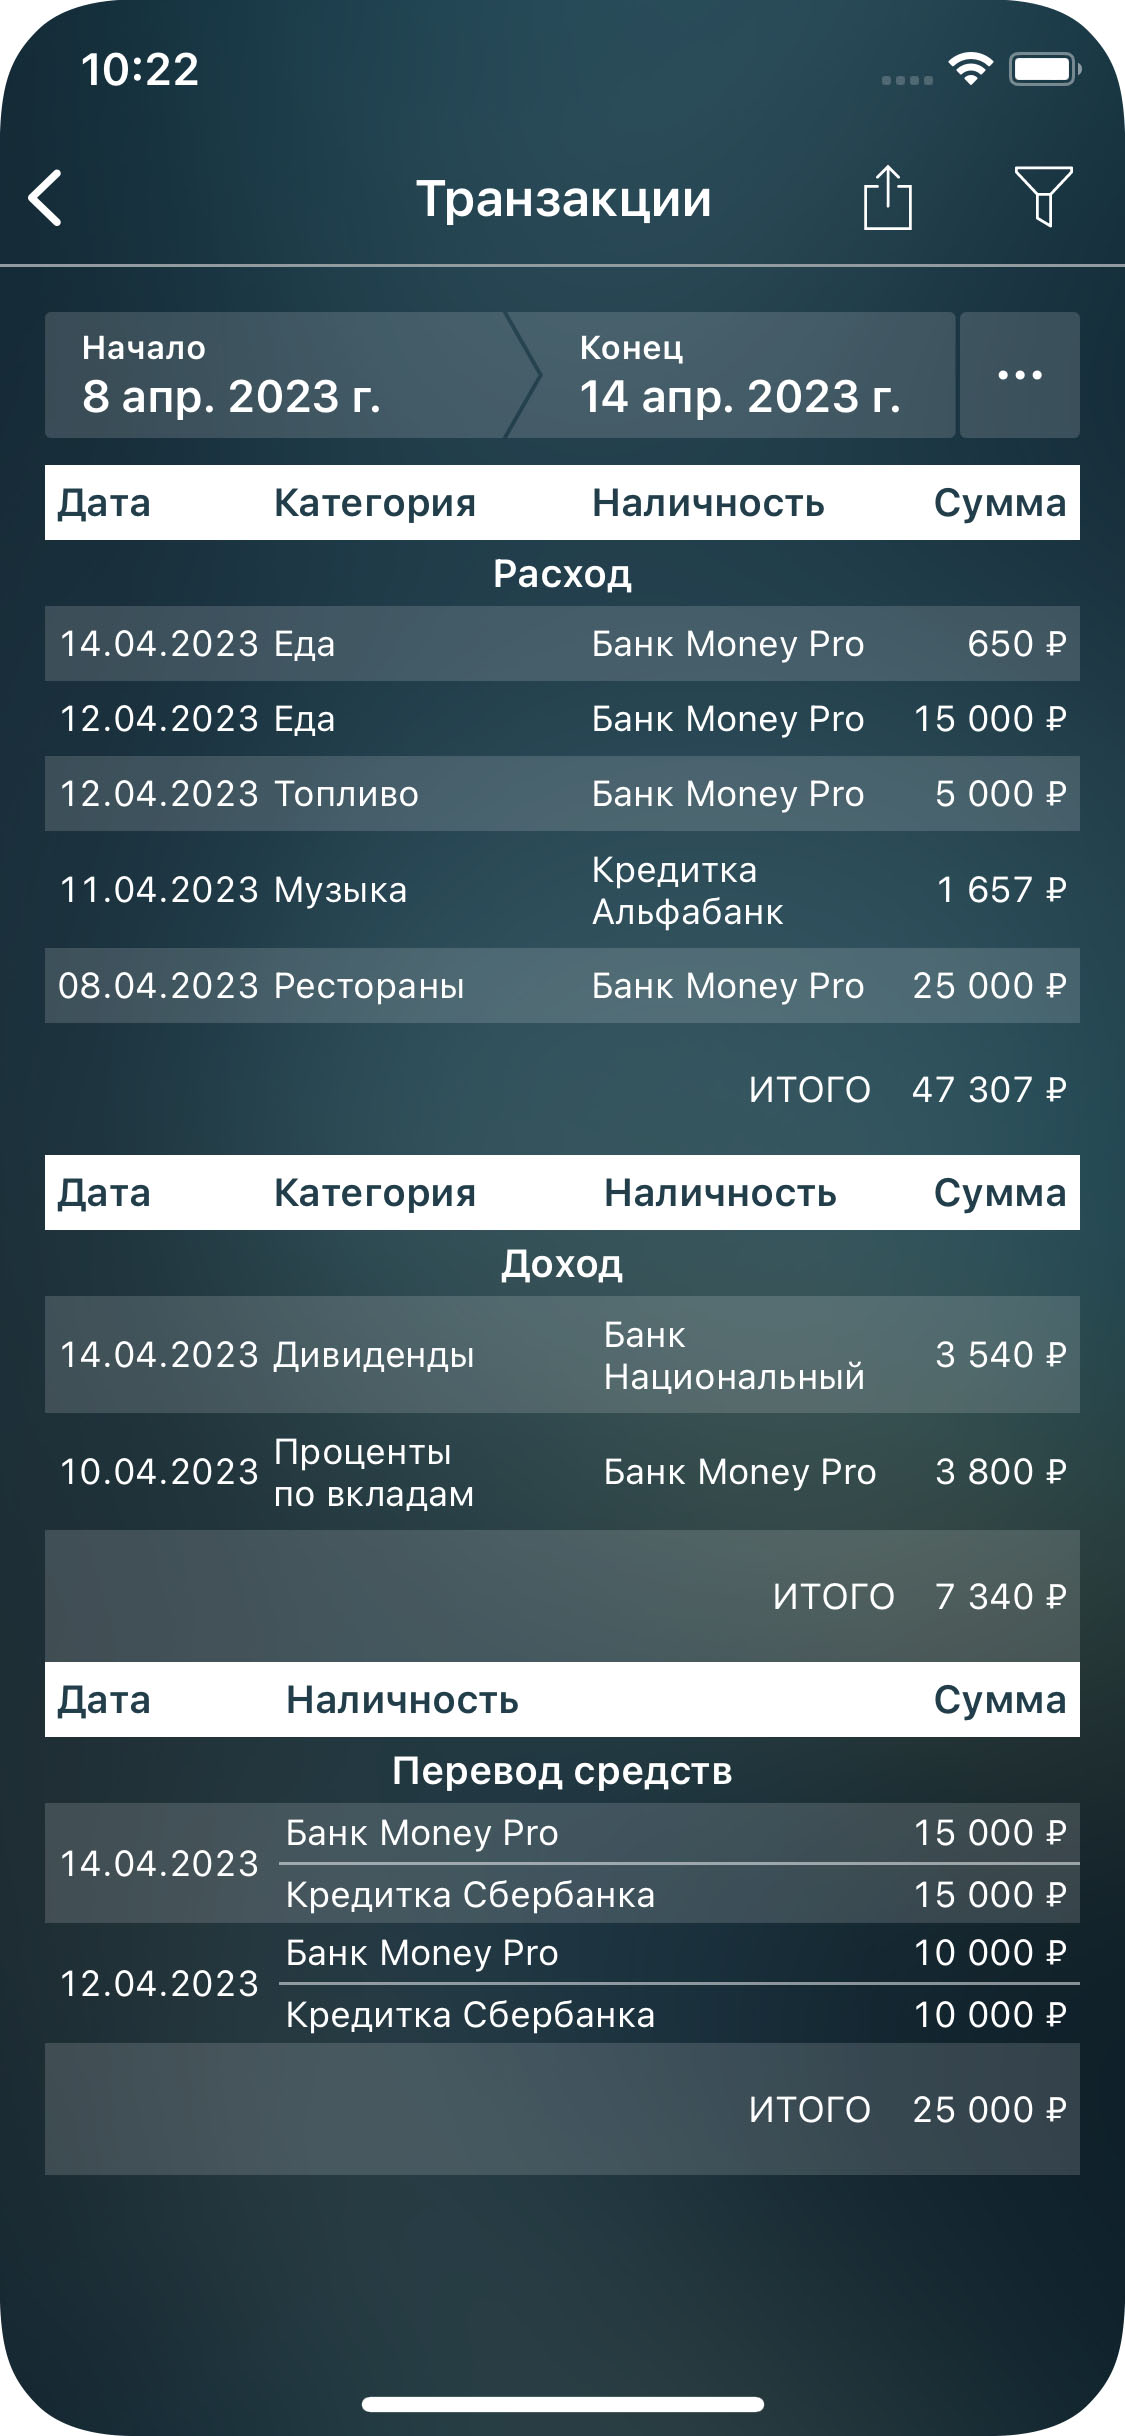 Money Pro - Отчёт “Транзакции” - iPhone